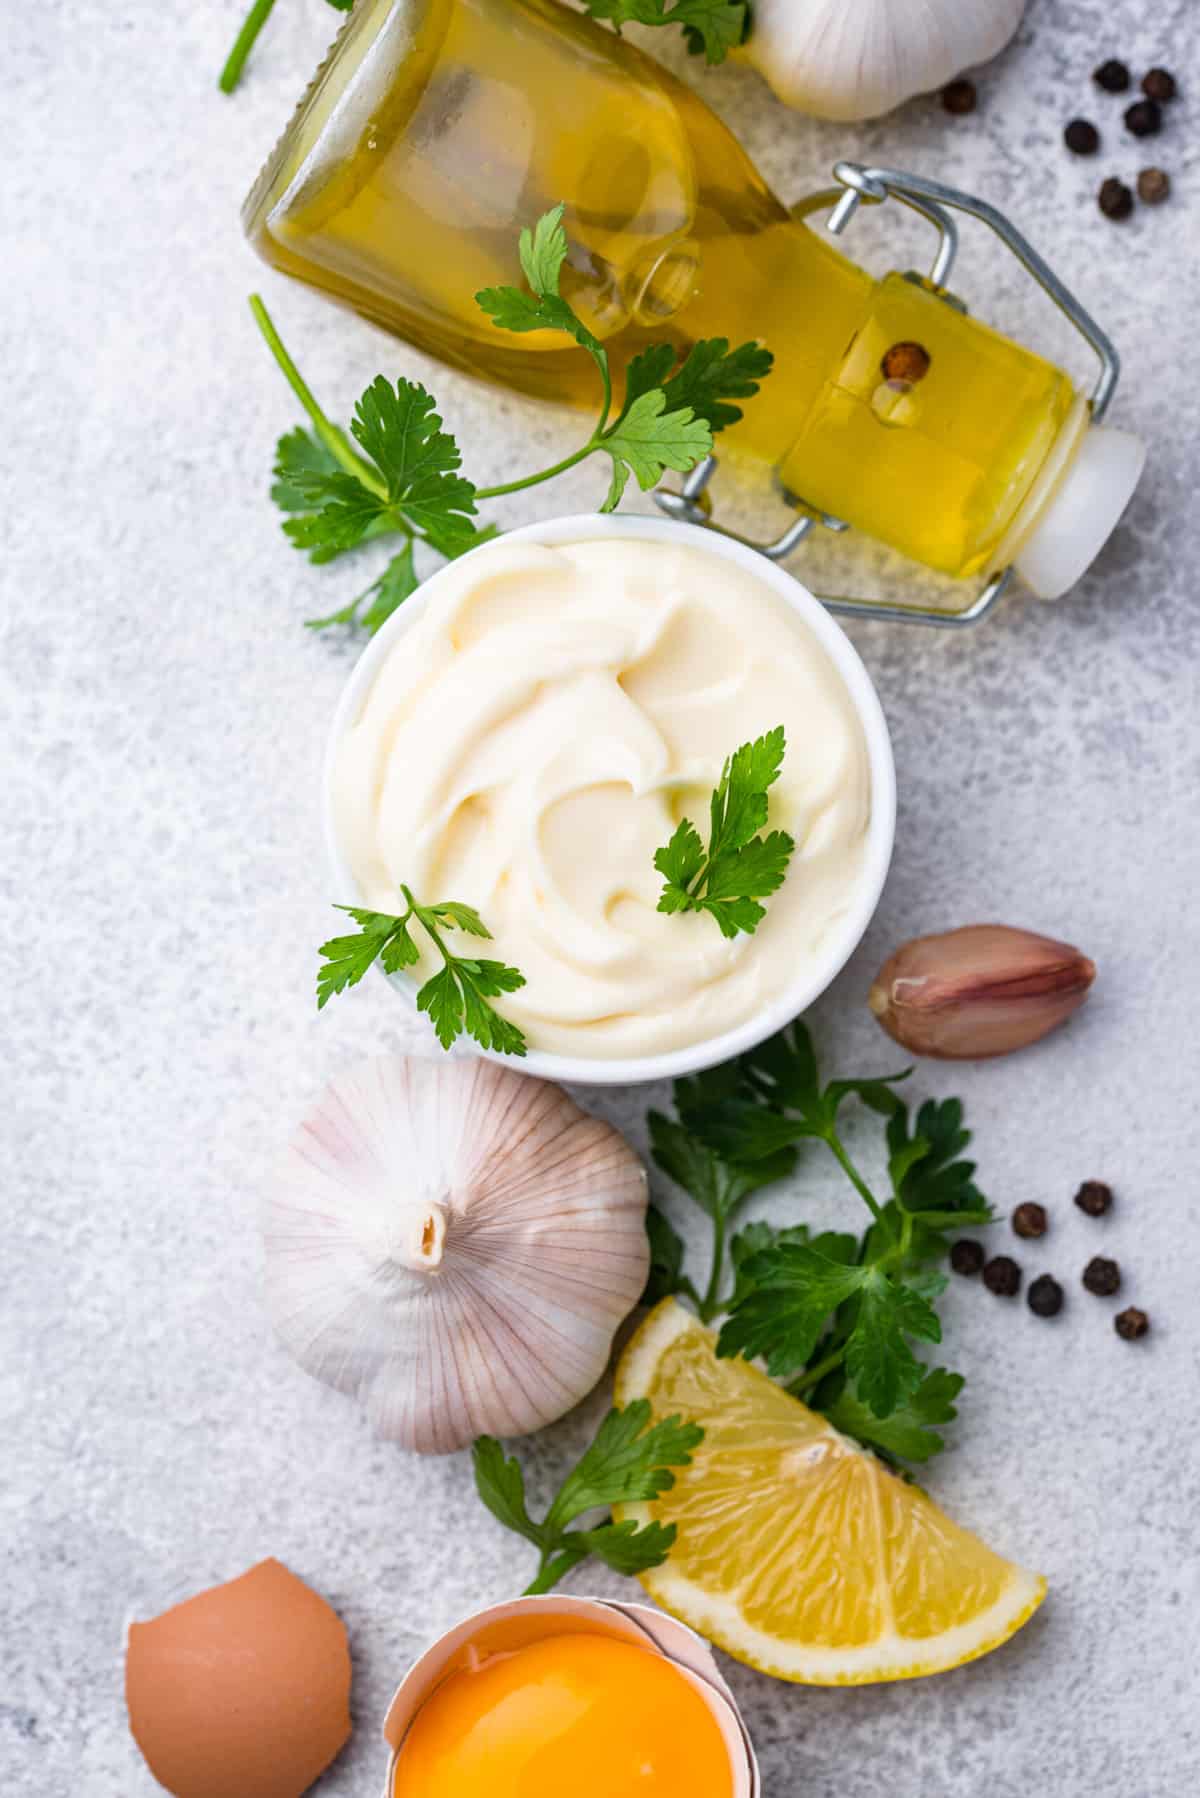 ingredients for a homemade mayonnaise recipe - eggs, garlic, oil, salt, pepper